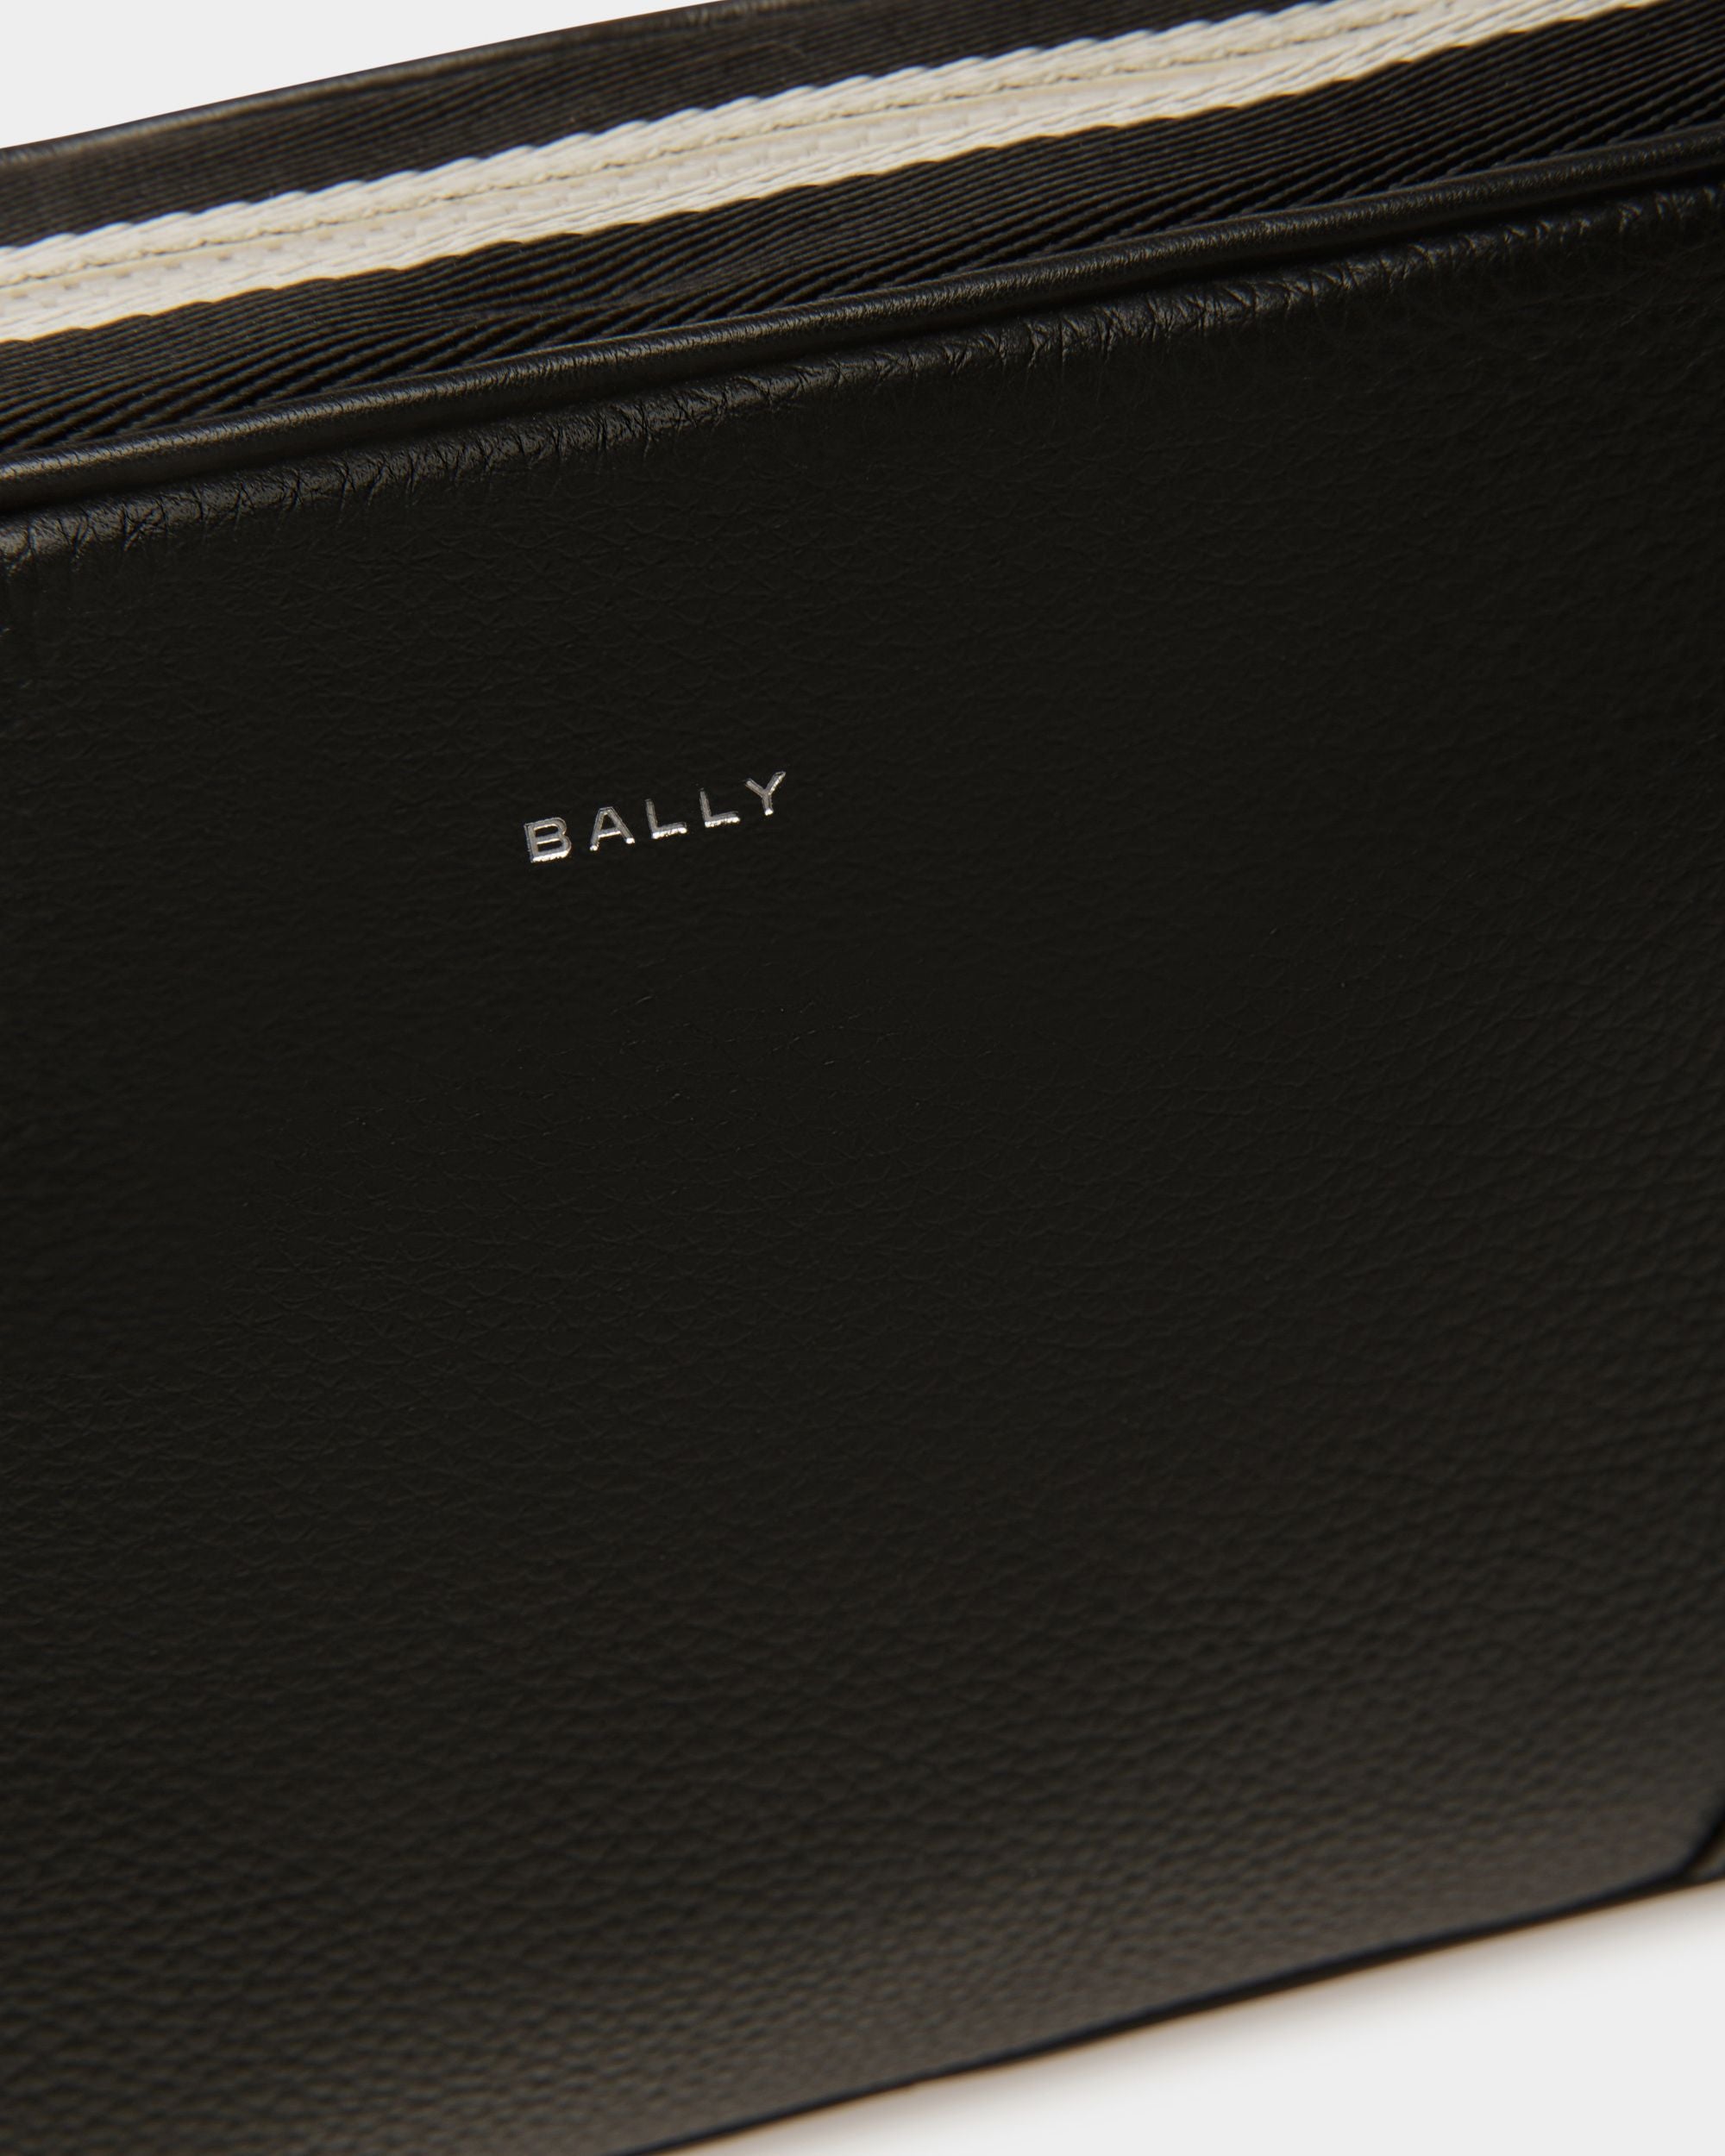 Bally Men's Gully Black Leather Clutch 6228707 7612501235732 - Handbags -  Jomashop